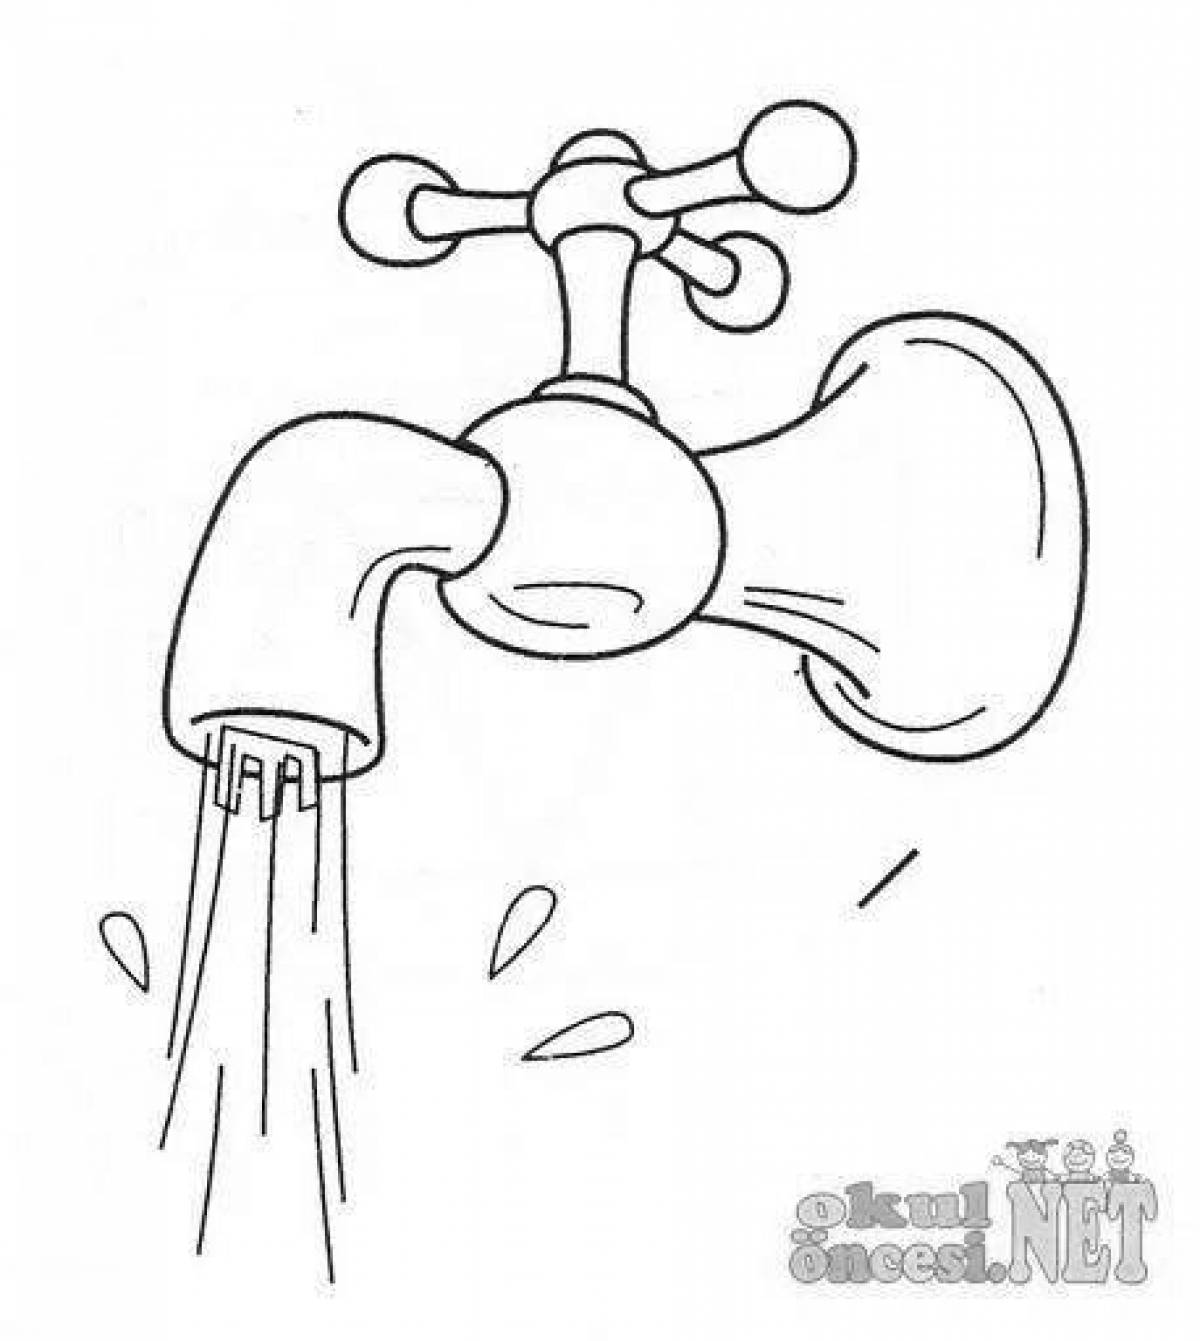 Water faucet #20